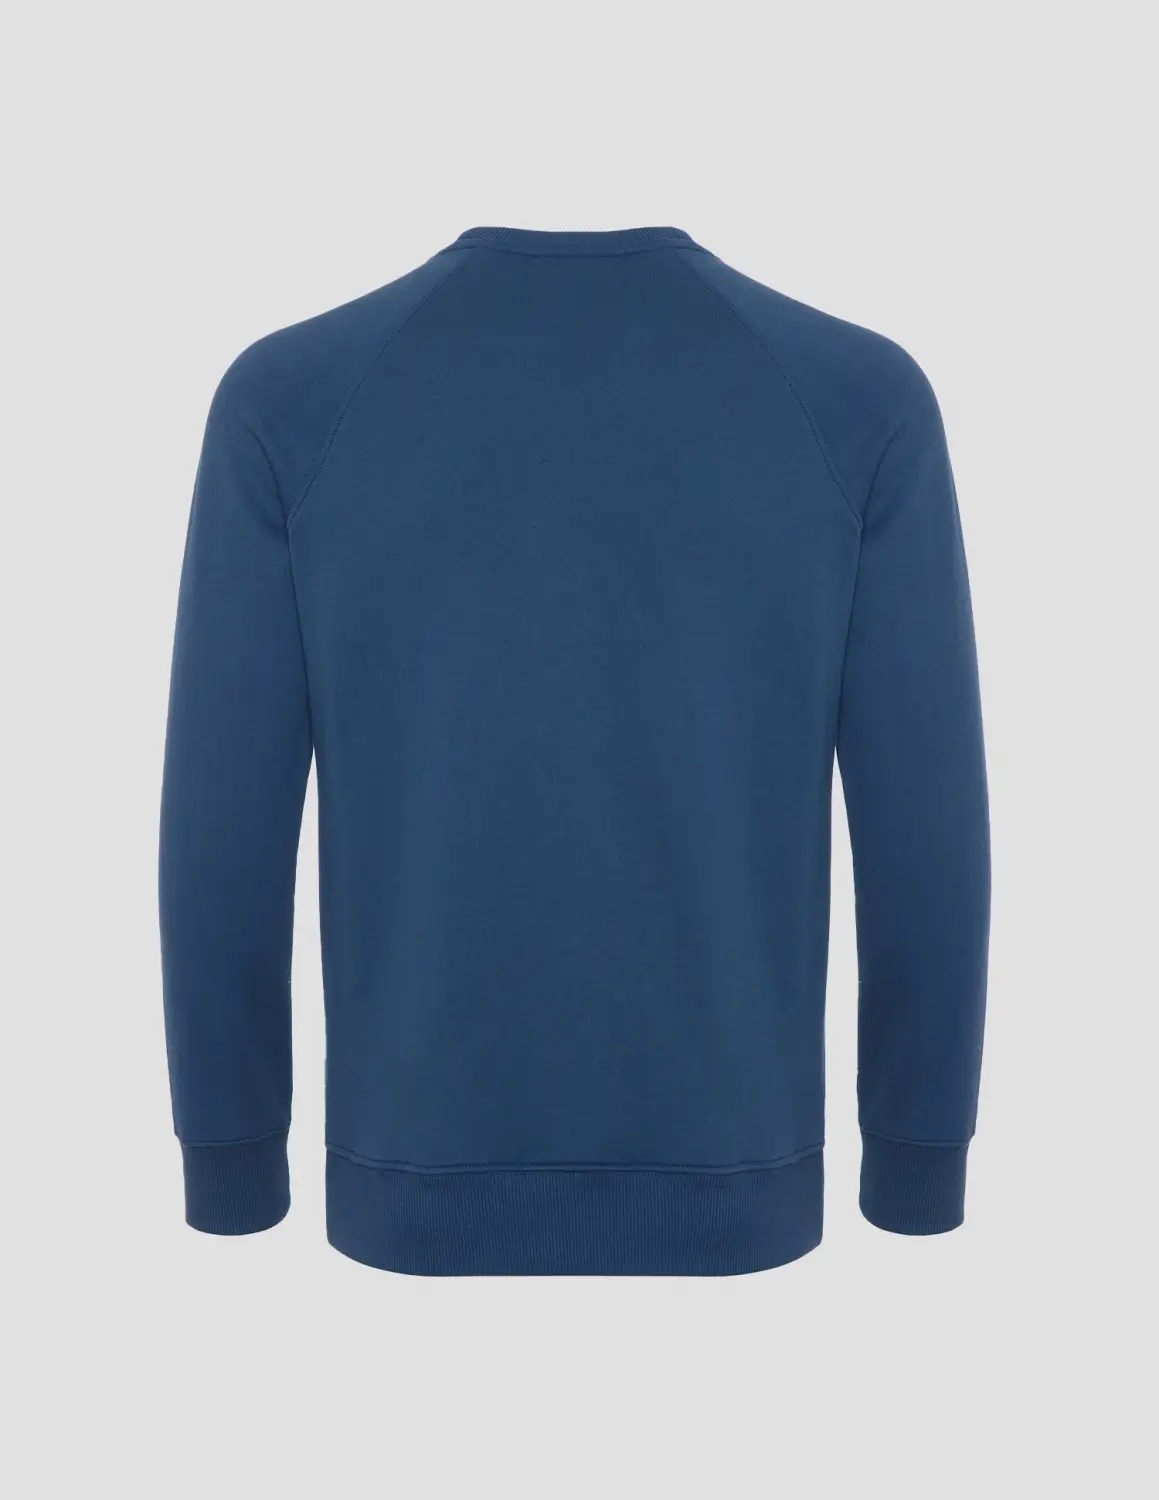 DIADORA  Sweatshirt Crew Iconic İndigo Mavi Erkek Sweatshirt - 502.173624-60065